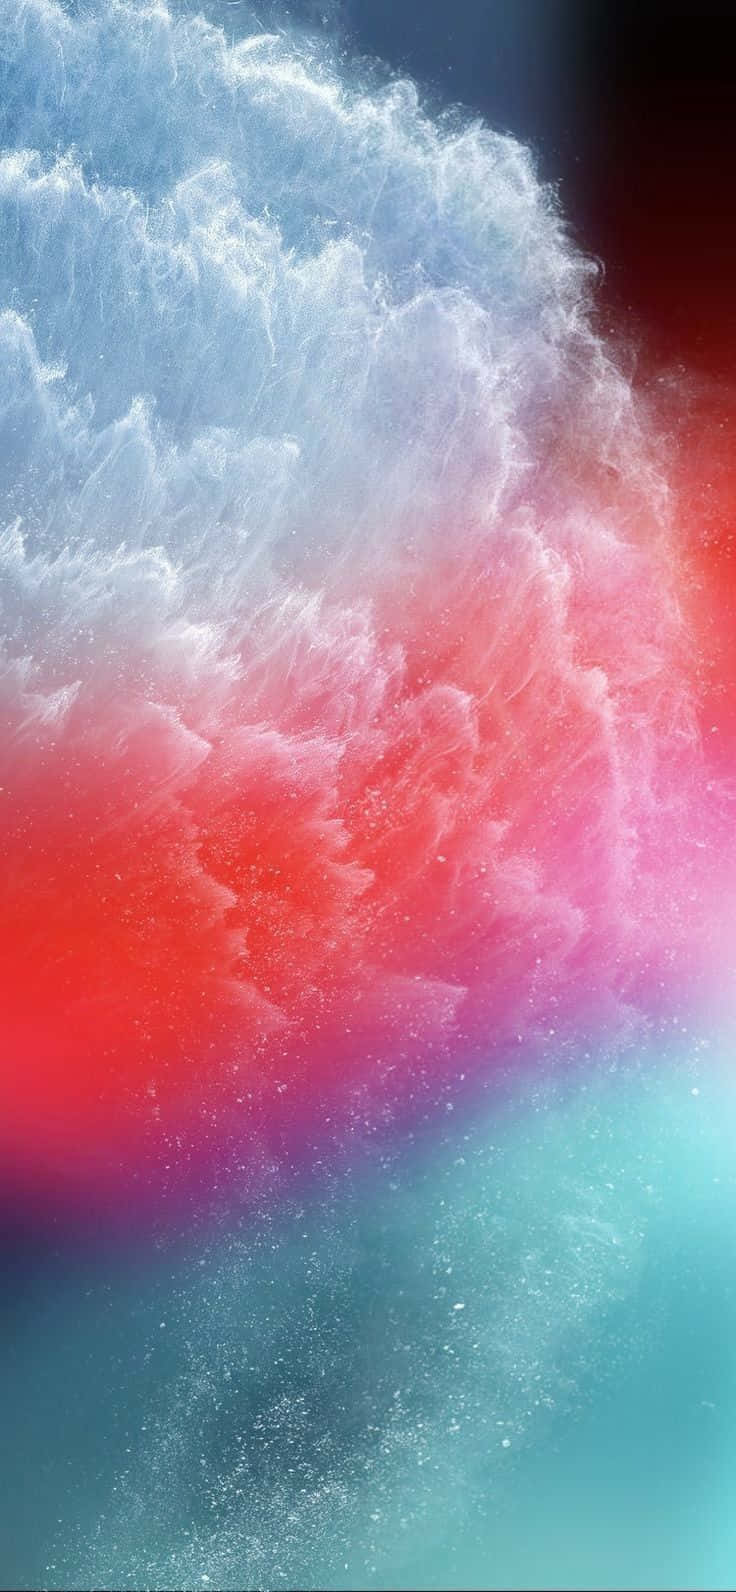 Original Iphone 5s Aesthetic Galaxy Sky Wallpaper